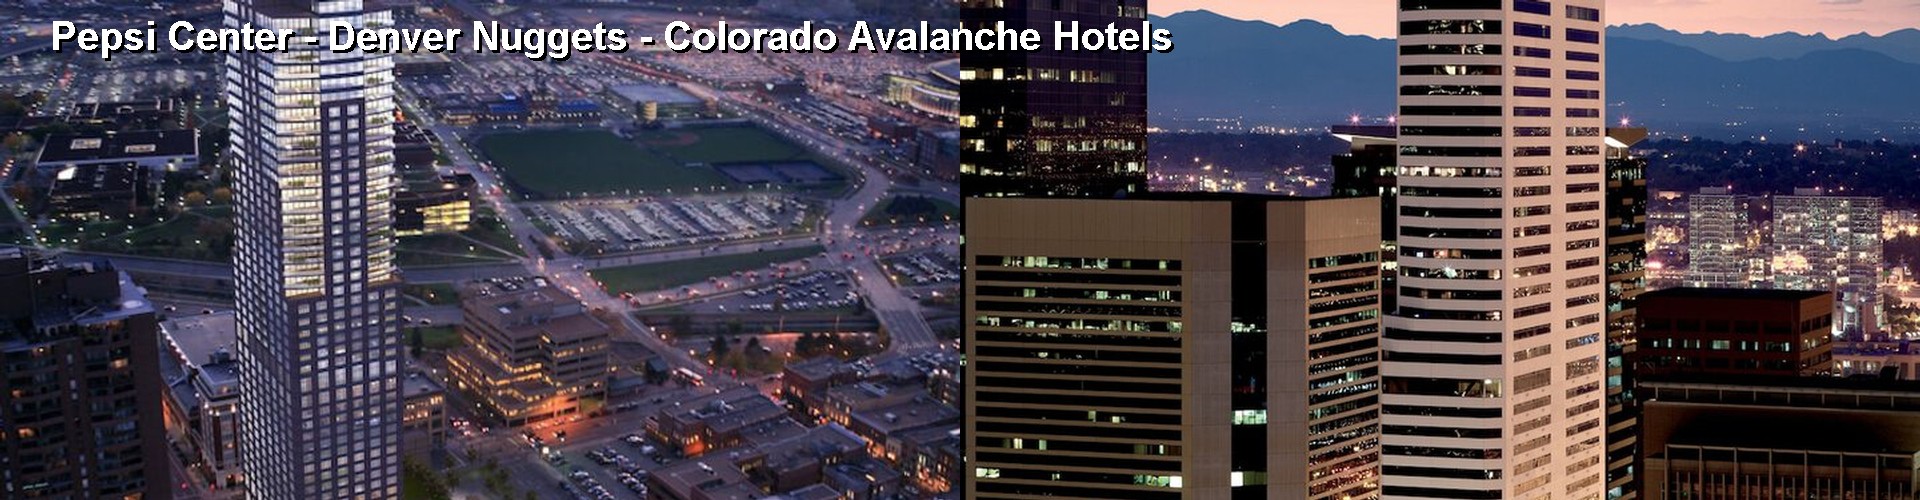 4 Best Hotels near Pepsi Center - Denver Nuggets - Colorado Avalanche